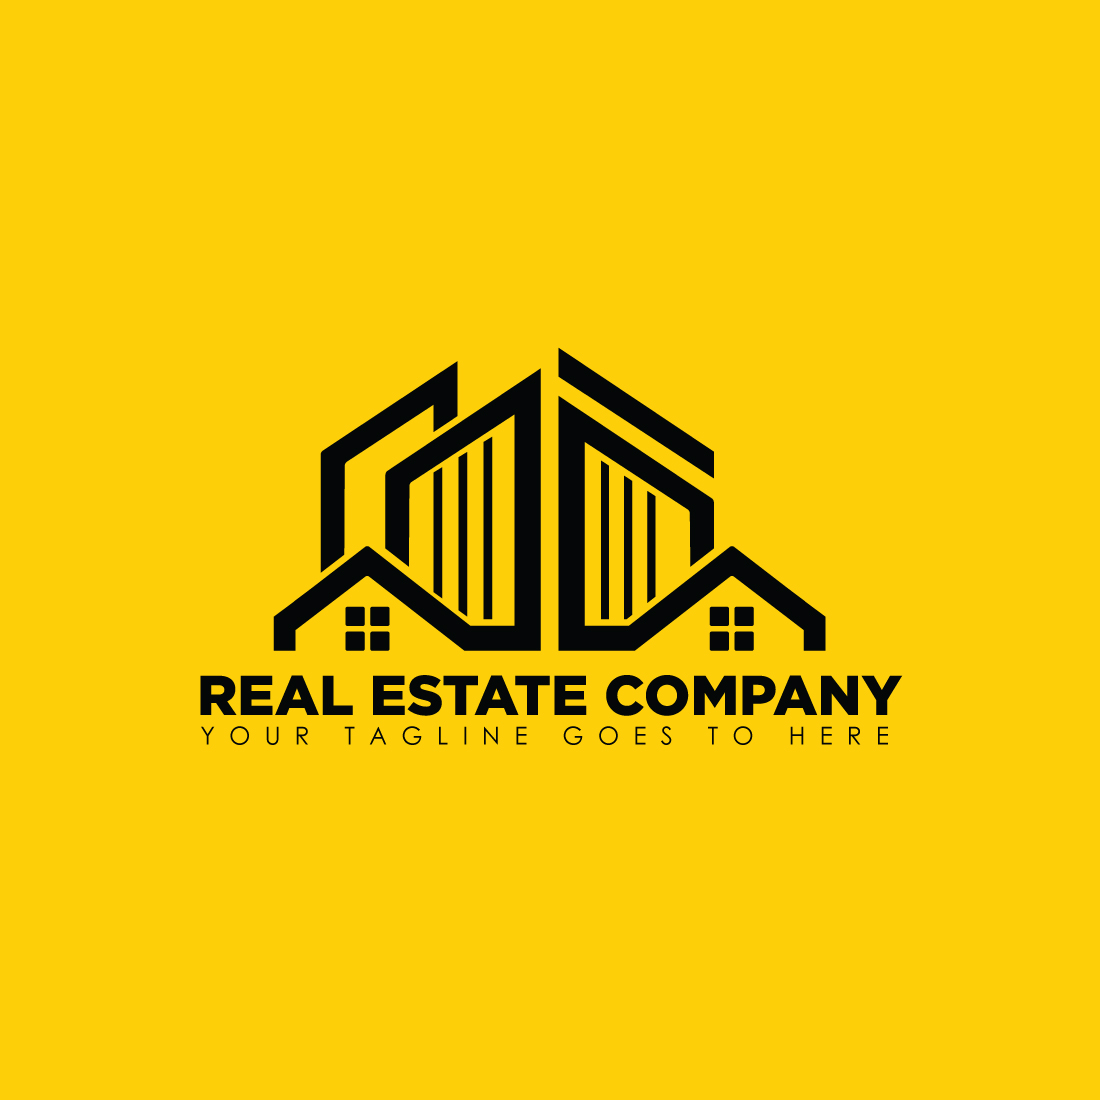 Real Estate company logo design cover image.